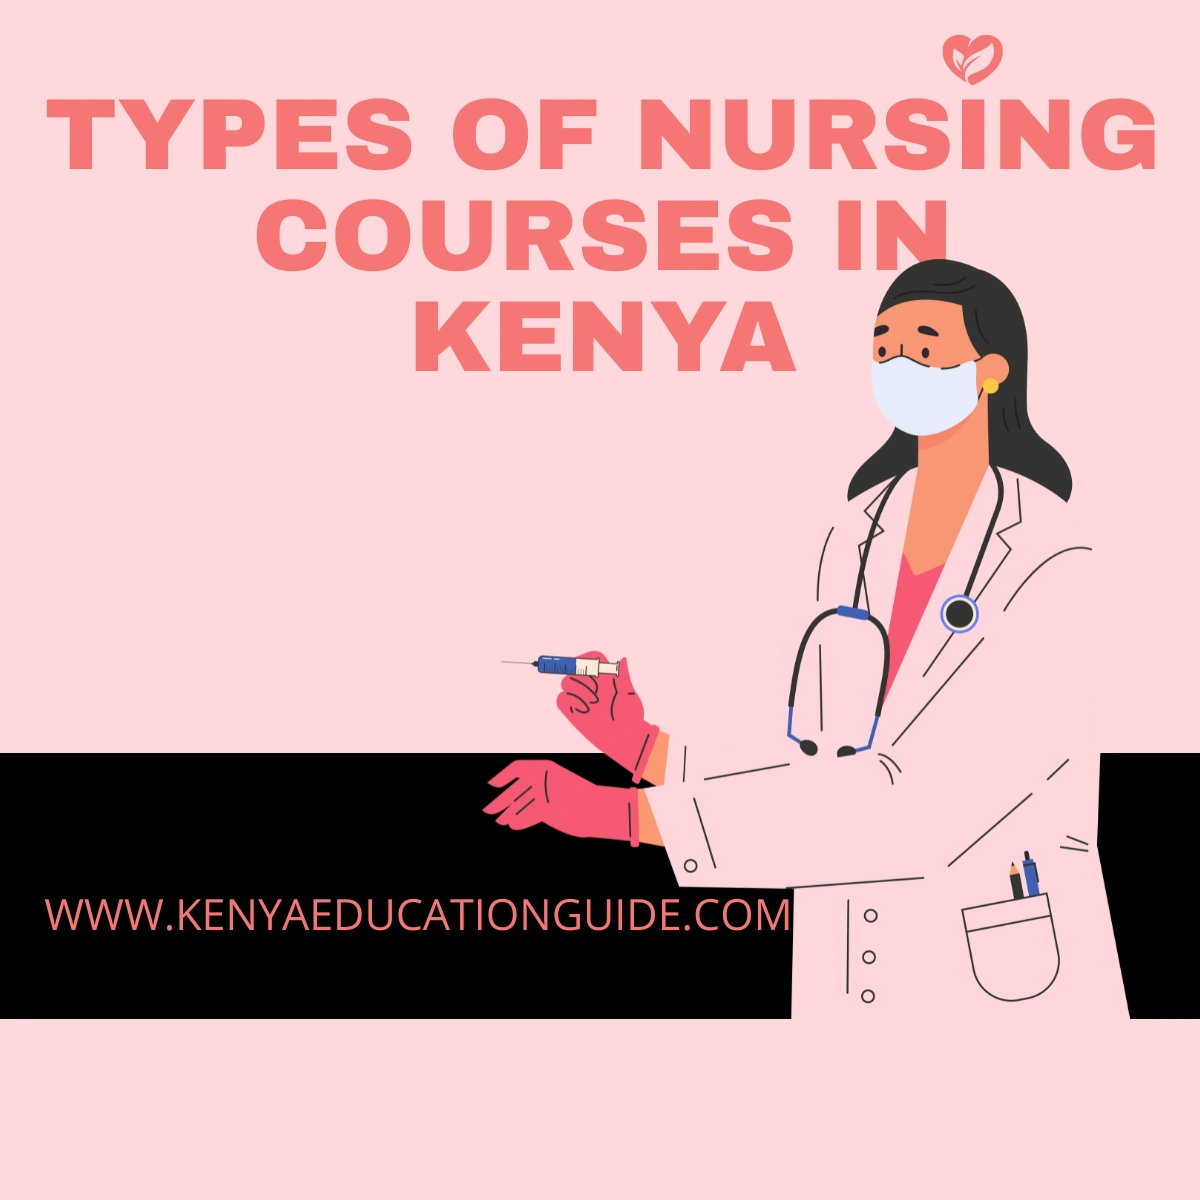 Types of Nursing Courses in Kenya